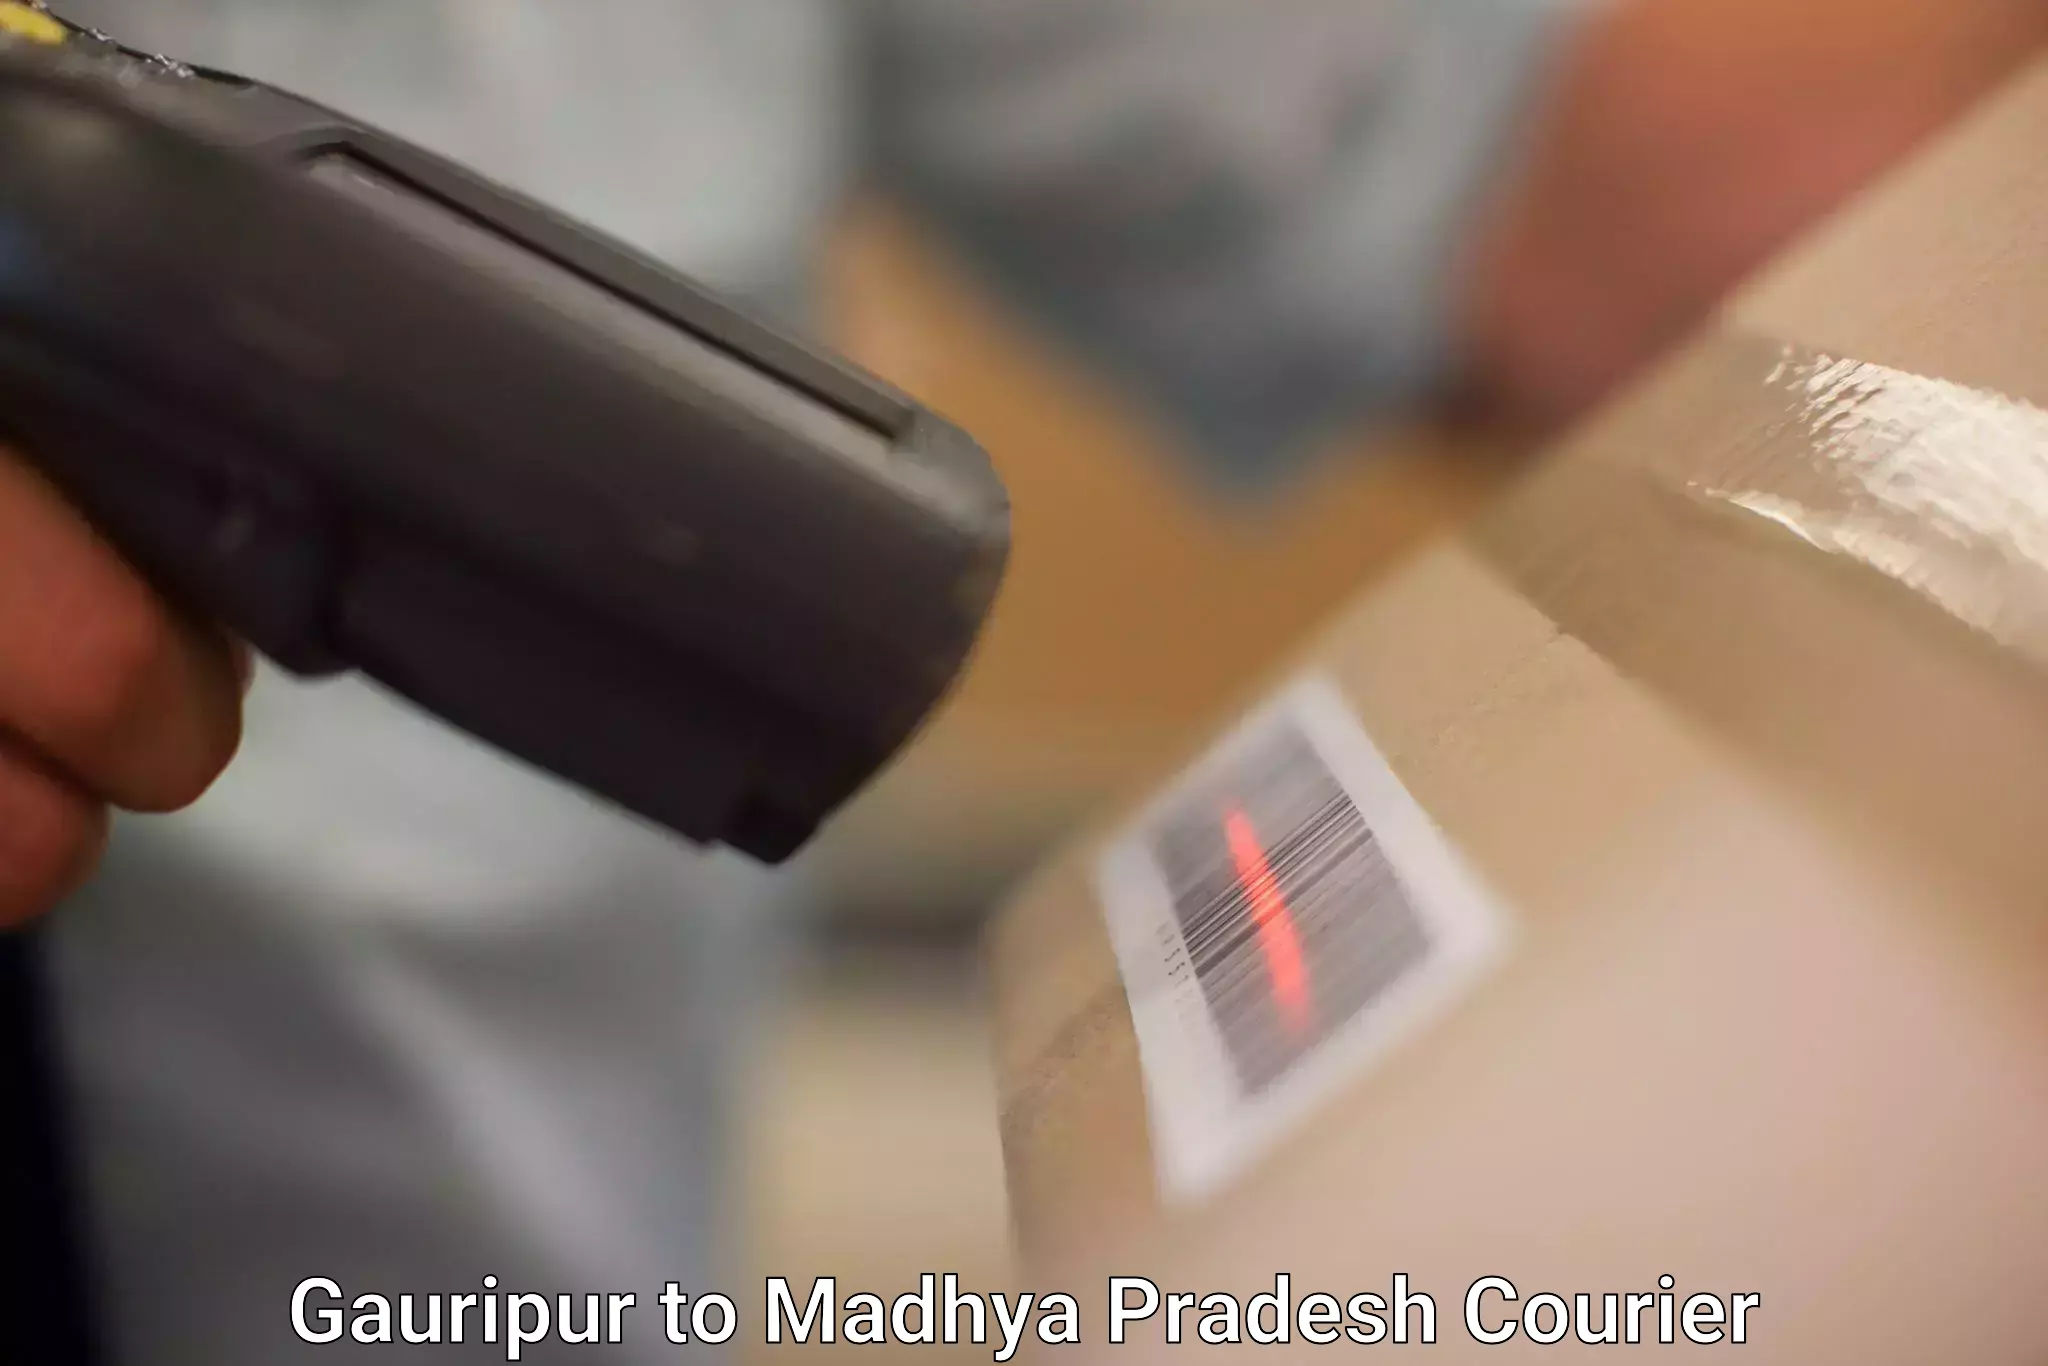 Speedy delivery service Gauripur to Narsinghpur